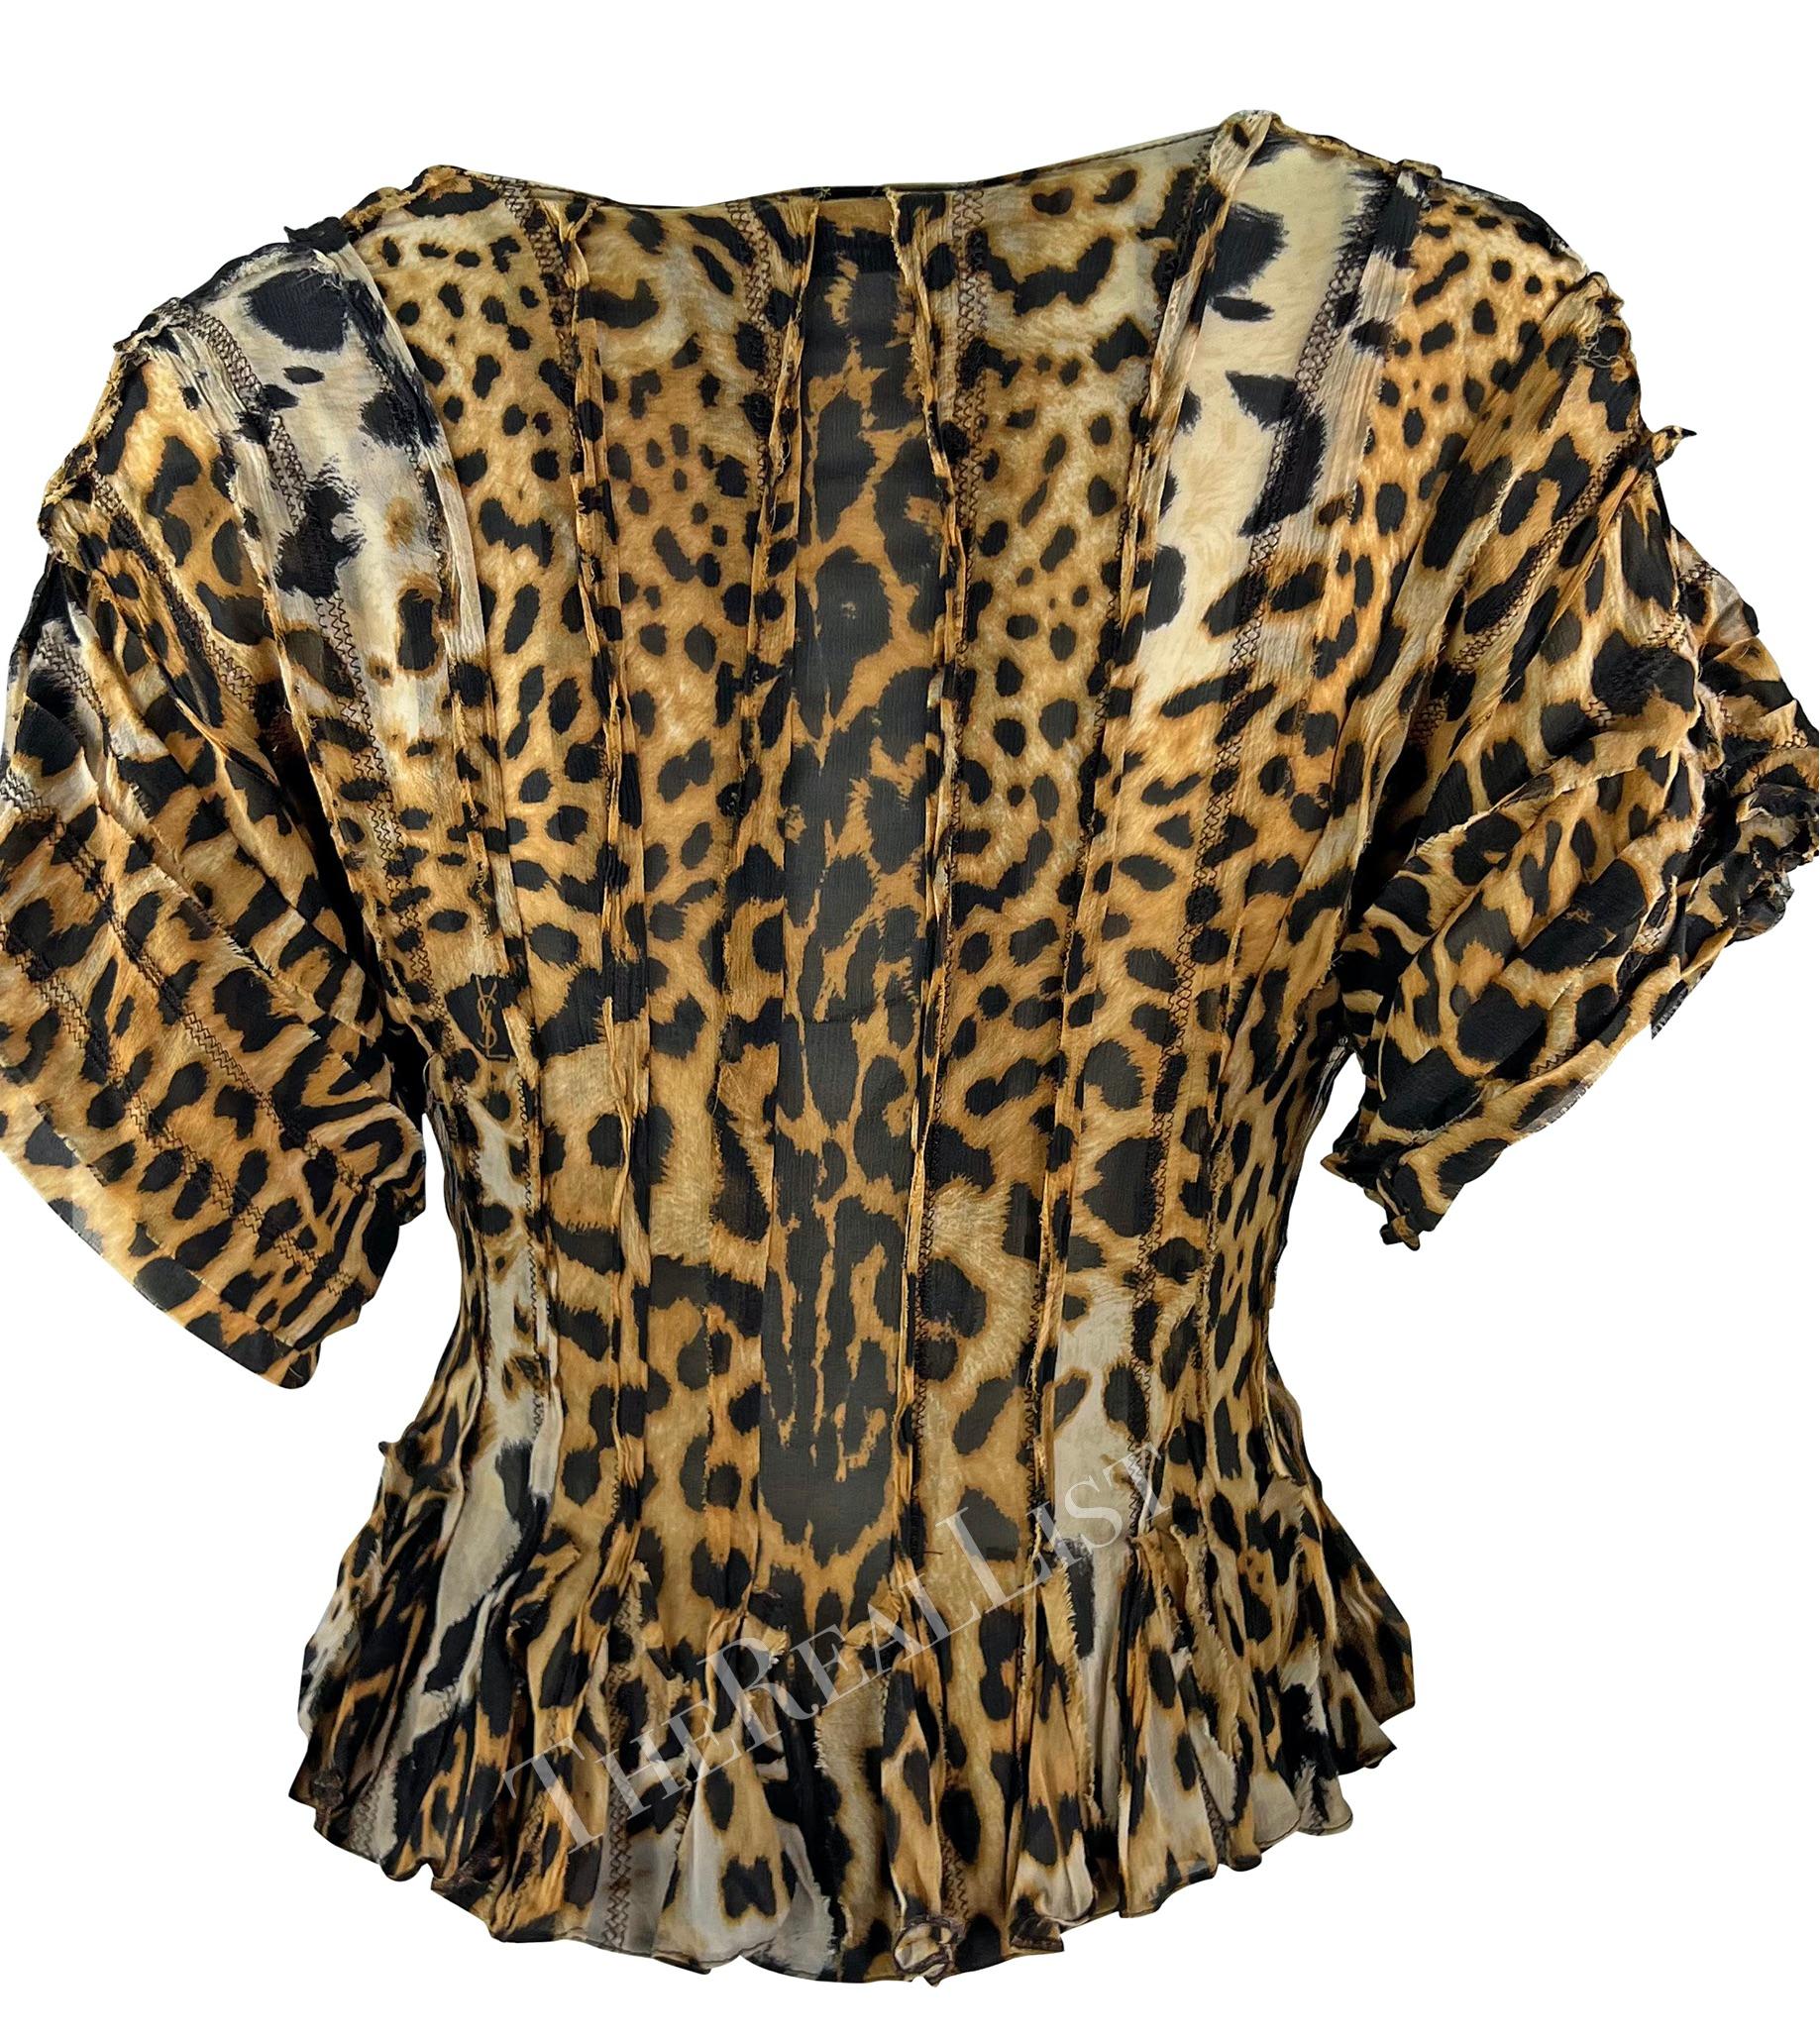 S/S 2002 Yves Saint Laurent by Tom Ford Safari Cheetah Print Sheer Silk Top For Sale 3